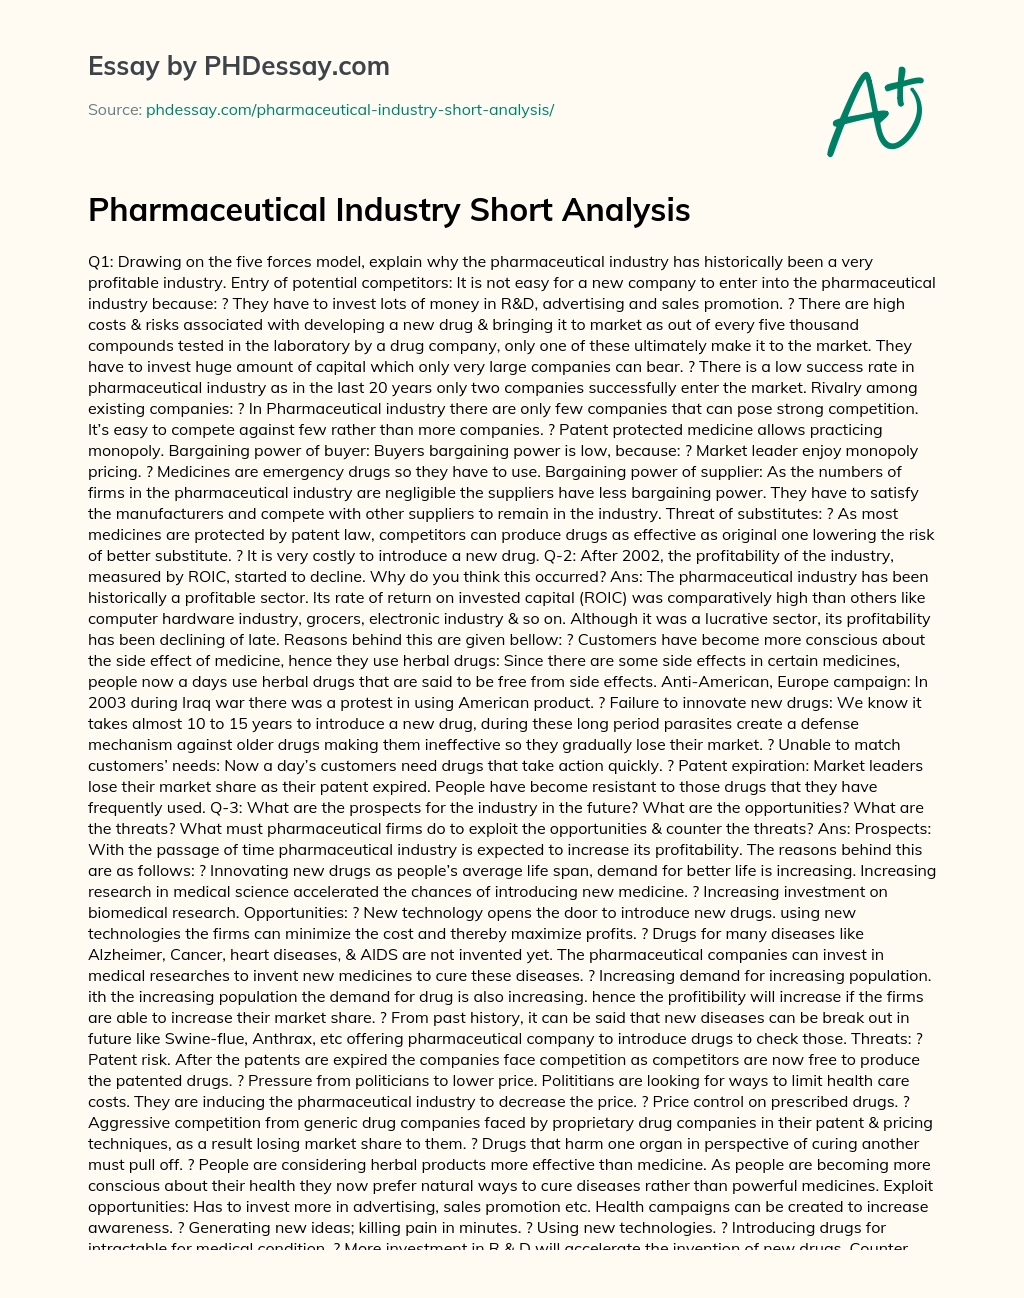 Pharmaceutical Industry Short Analysis essay